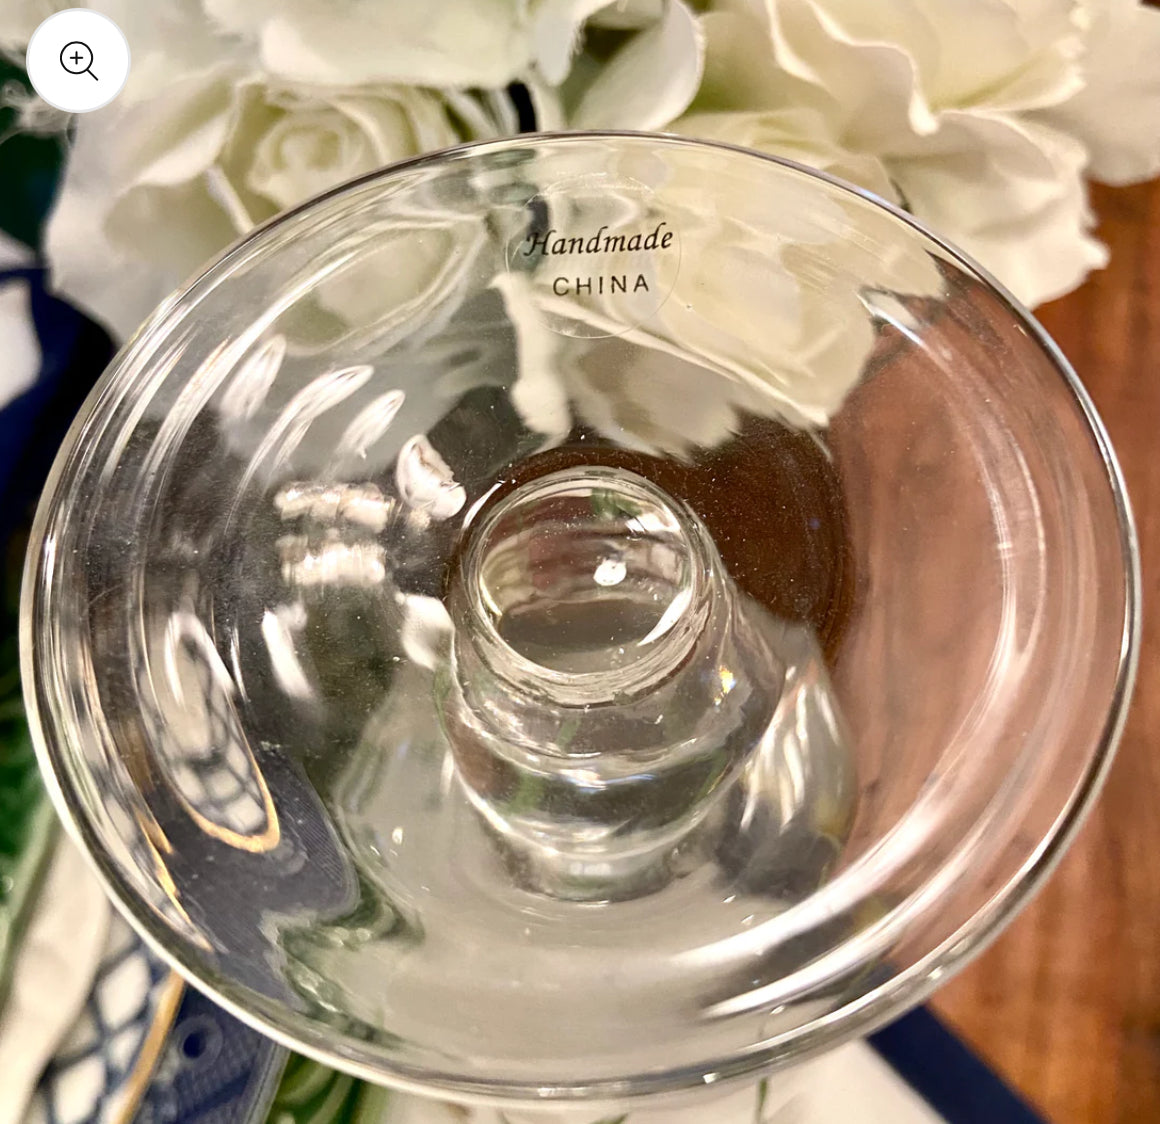 Set of 6 vintage hand painted springtime water goblet wine glasses